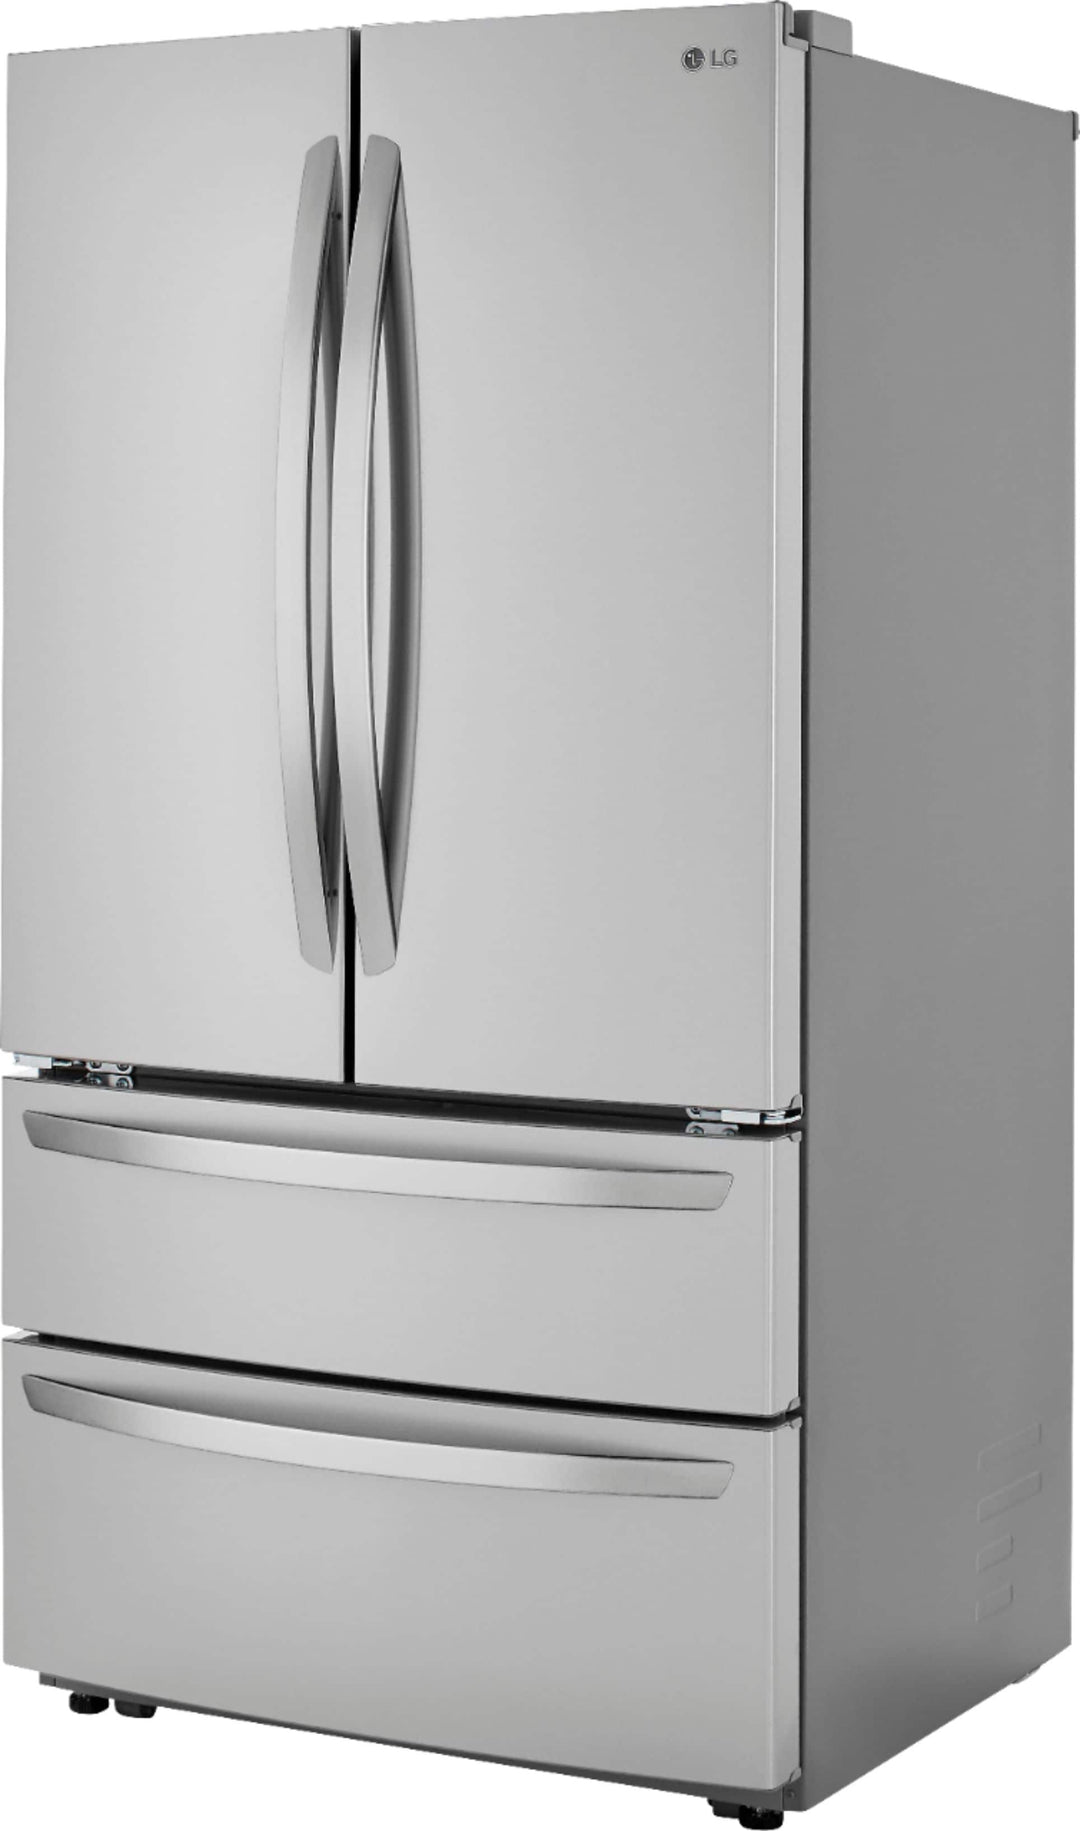 LG - 22.7 Cu. Ft. 4-Door French Door Counter-Depth Refrigerator with Double Freezer and Internal Water Dispenser - Stainless steel_12